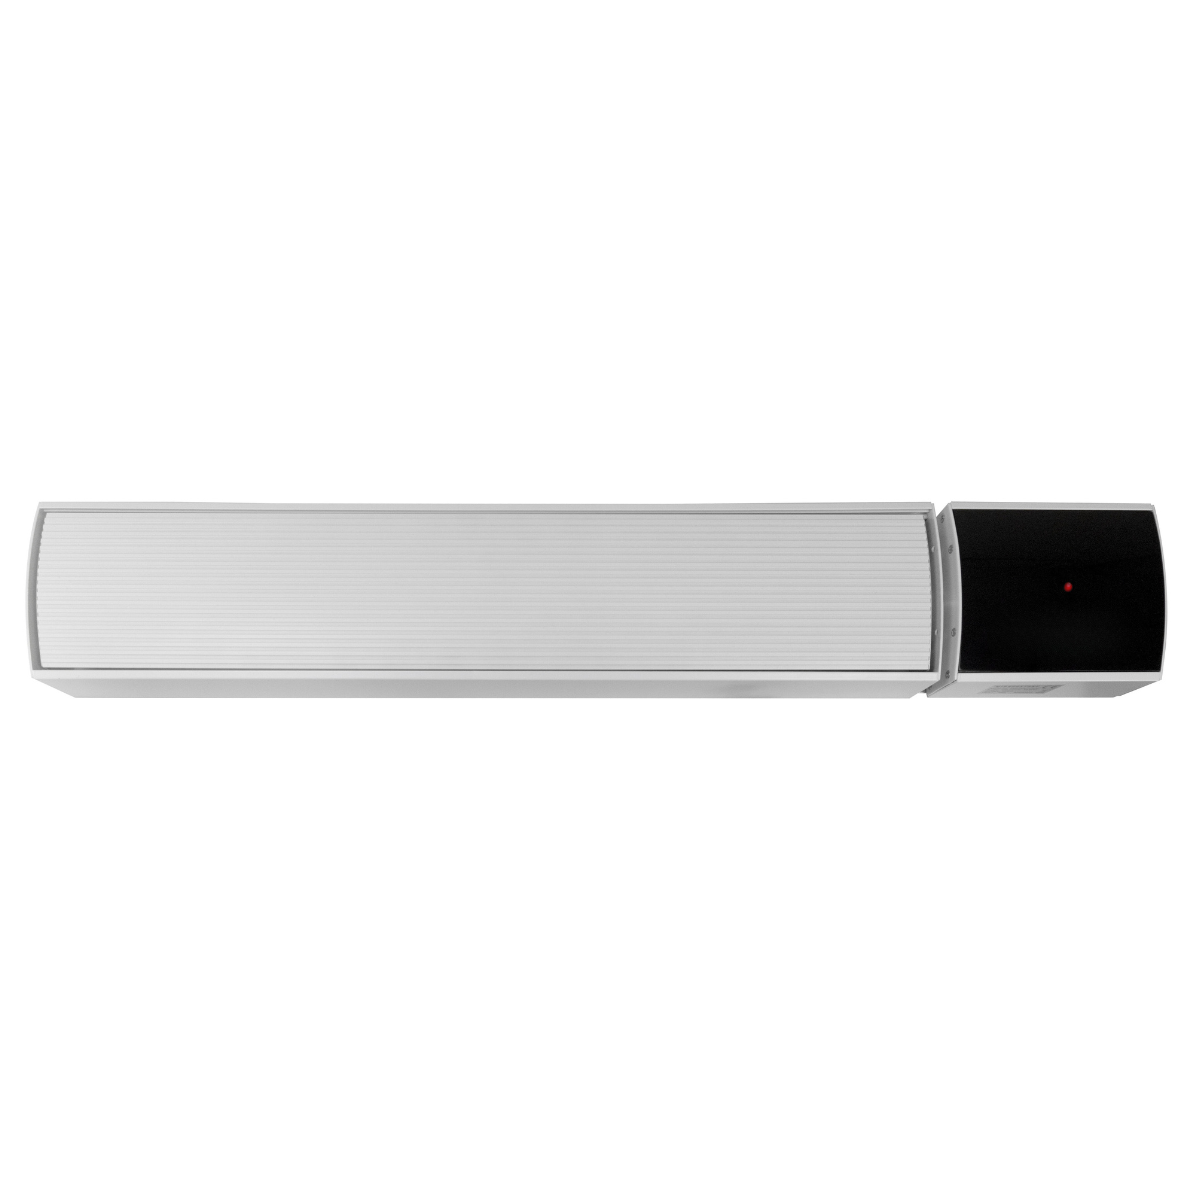 1.2kW Zenos Infrared Bar Heater